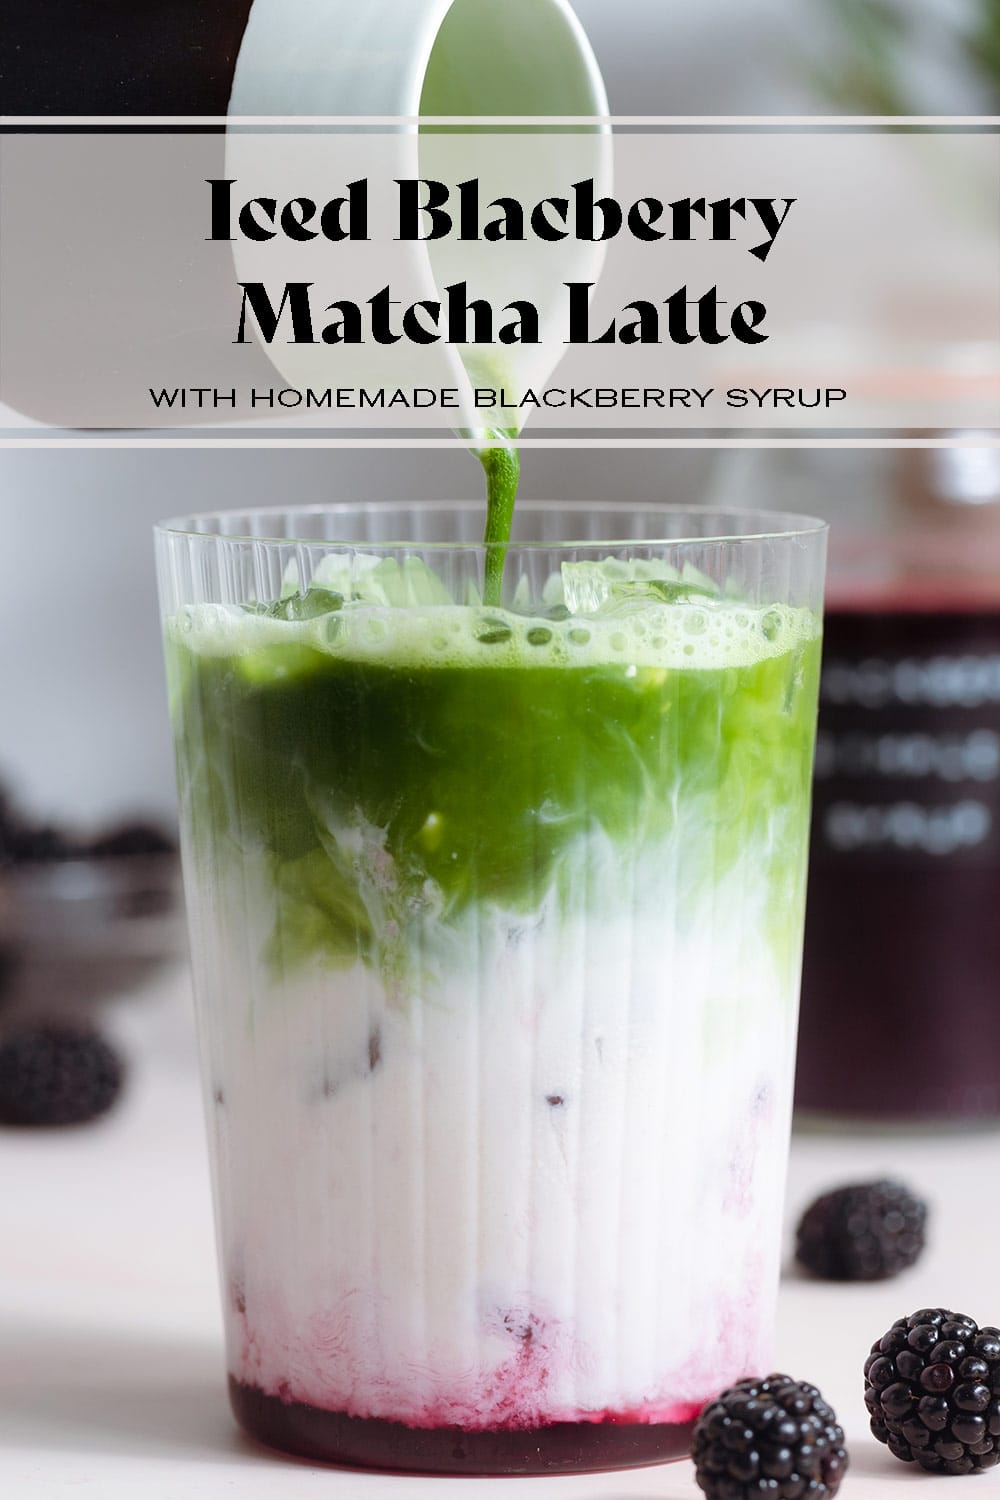 Iced Blackberry Matcha Latte